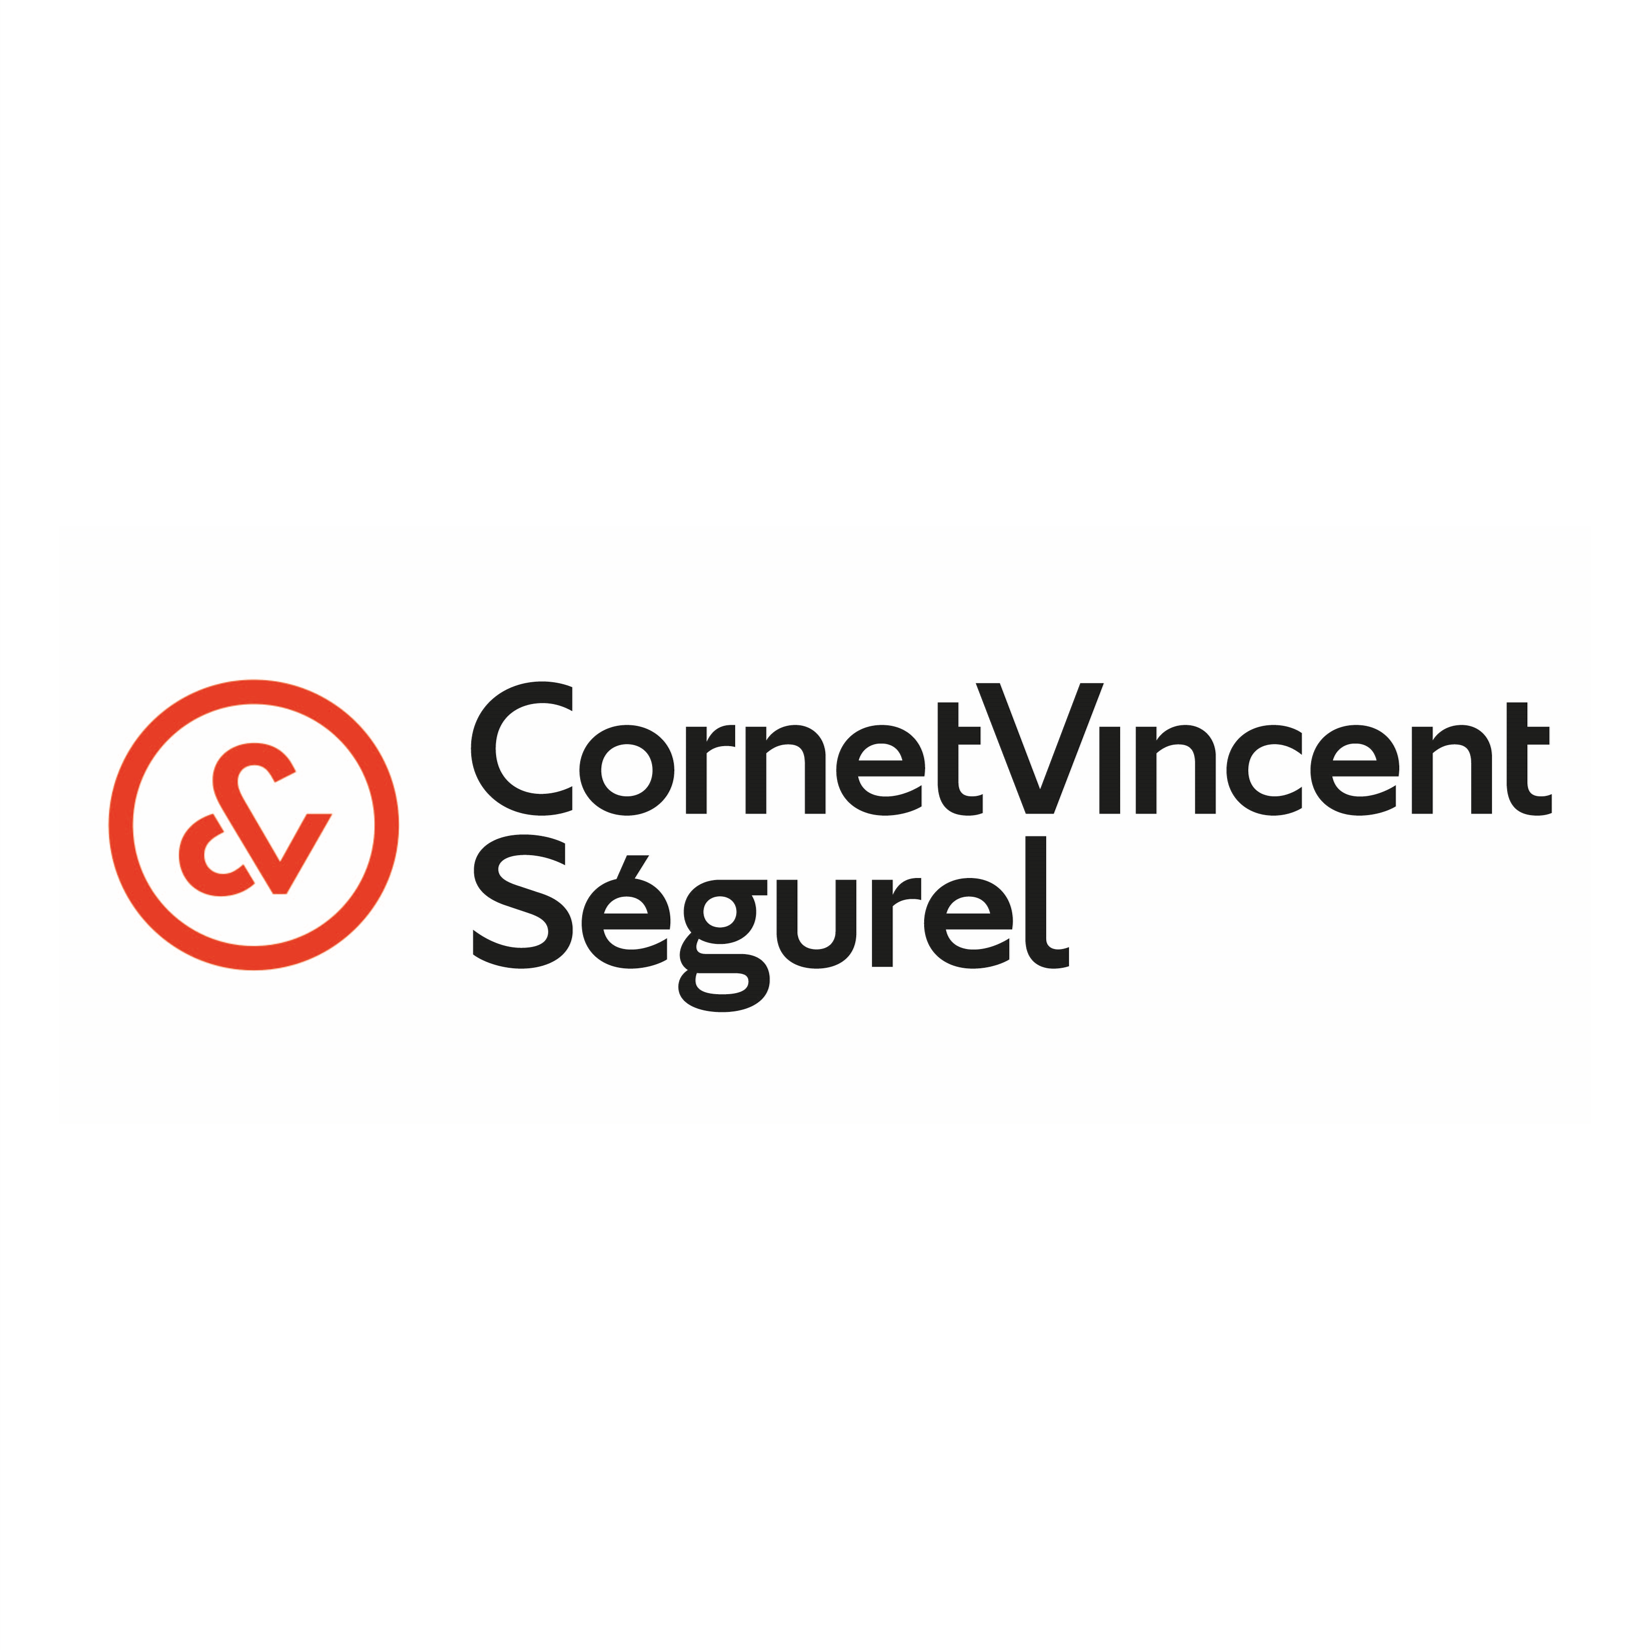 Cornet Vincent Ségurel